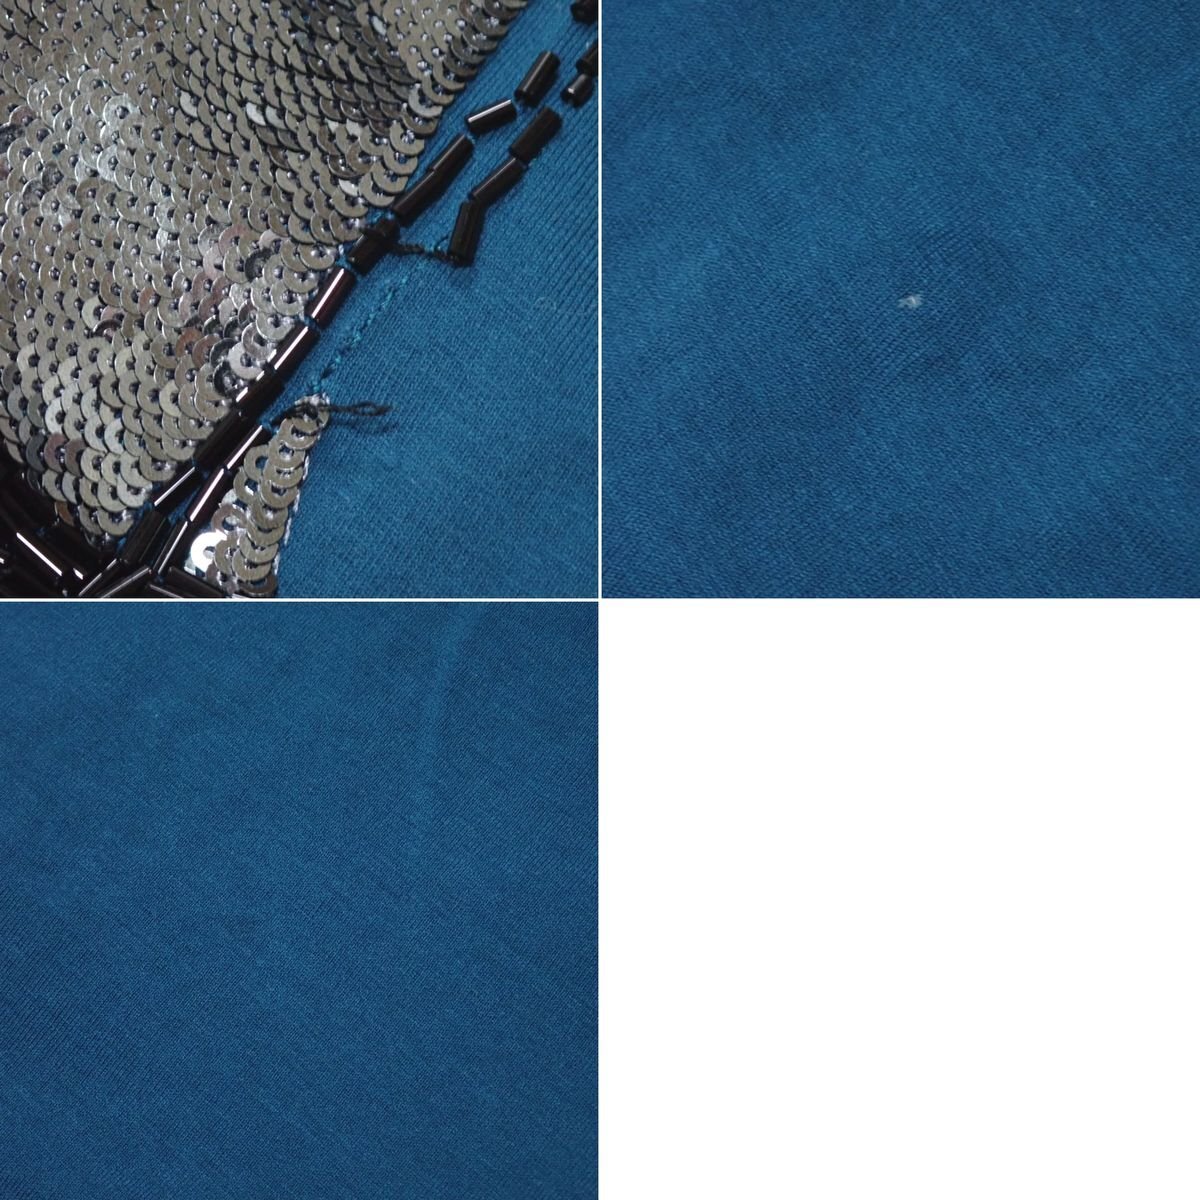 *CELINE/ Celine short sleeves T-shirt lady's XL/ blue group / beads / spangled / cotton / round neck &1909700036